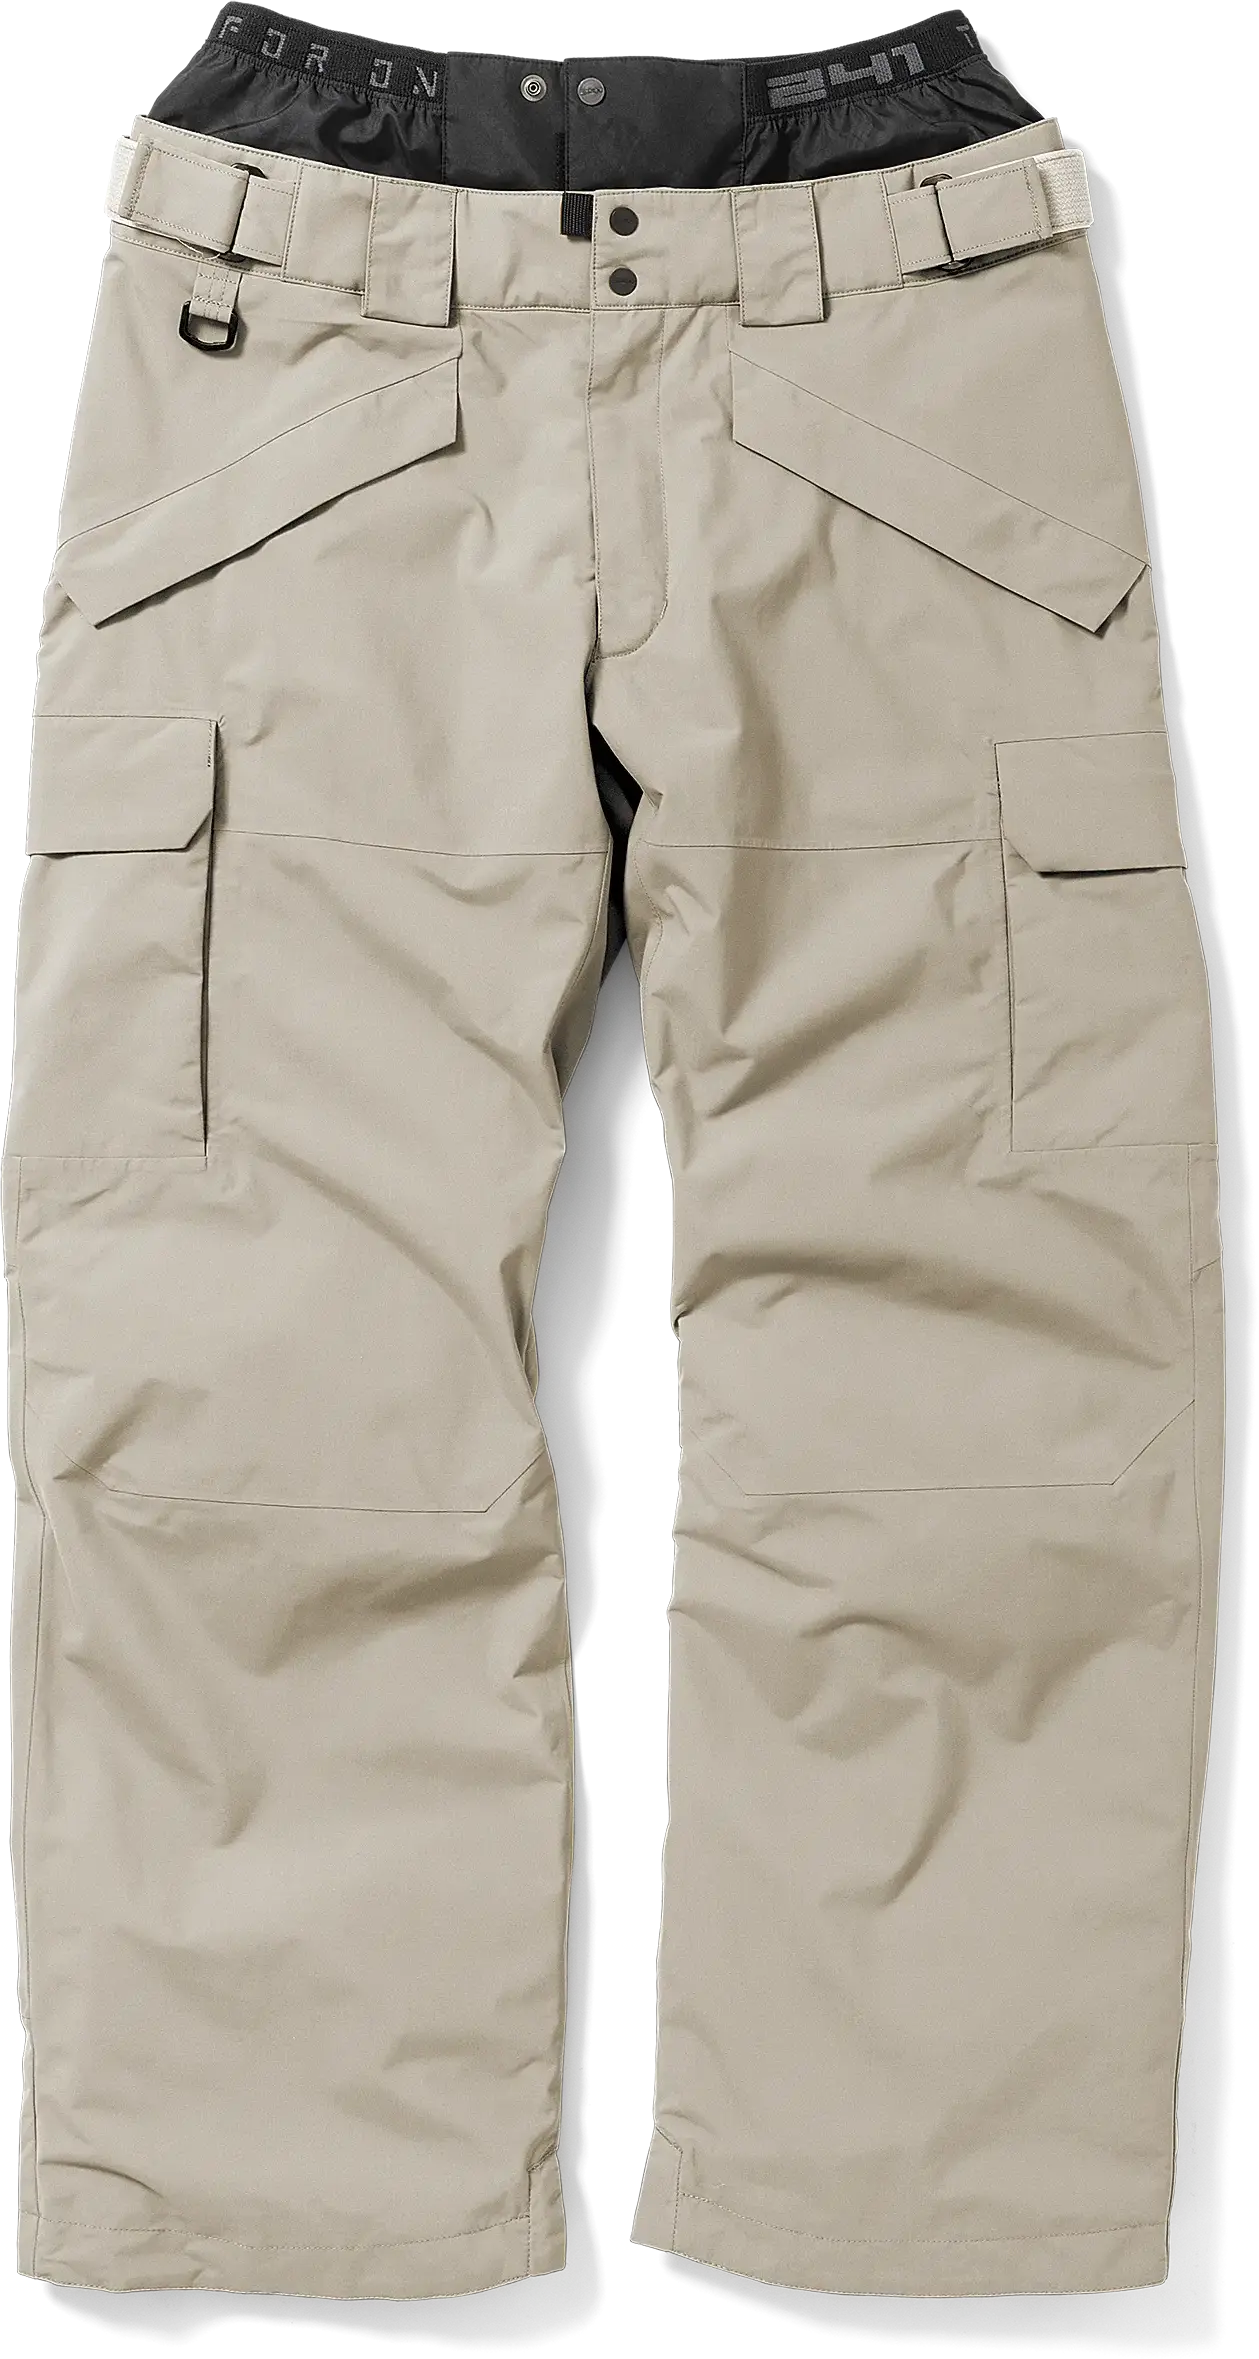 241-Explorer pants